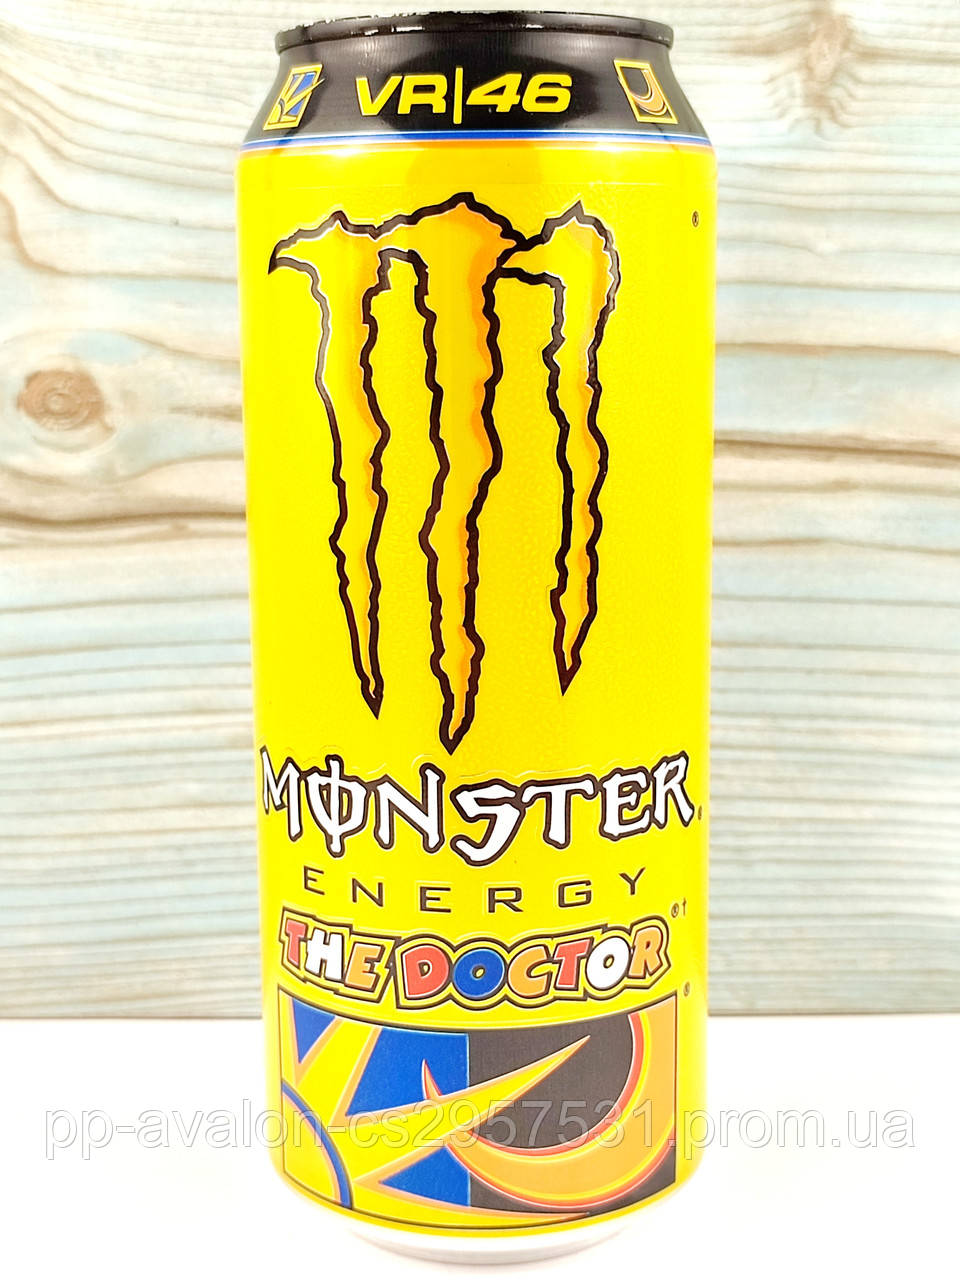 Газований енергетичний напій Monster Energy The Doctor 500 мл Великобританія